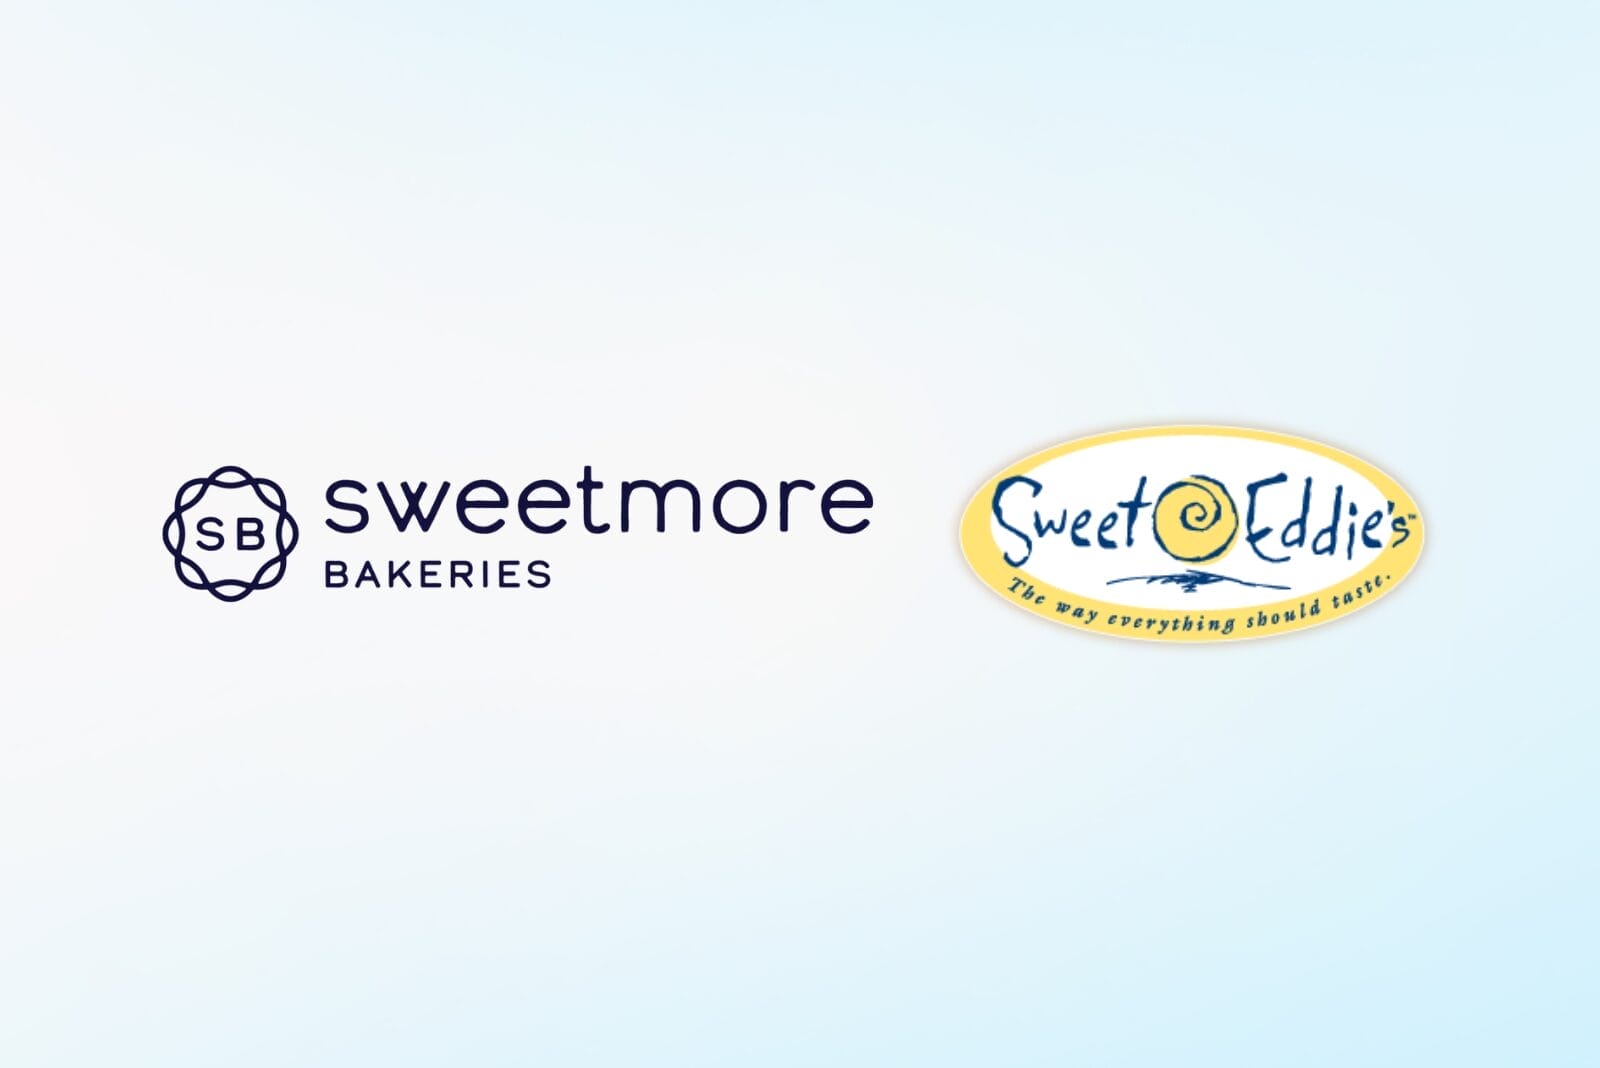 Sweetmore Bakeries and Sweet Eddie's' logos on gradient background.